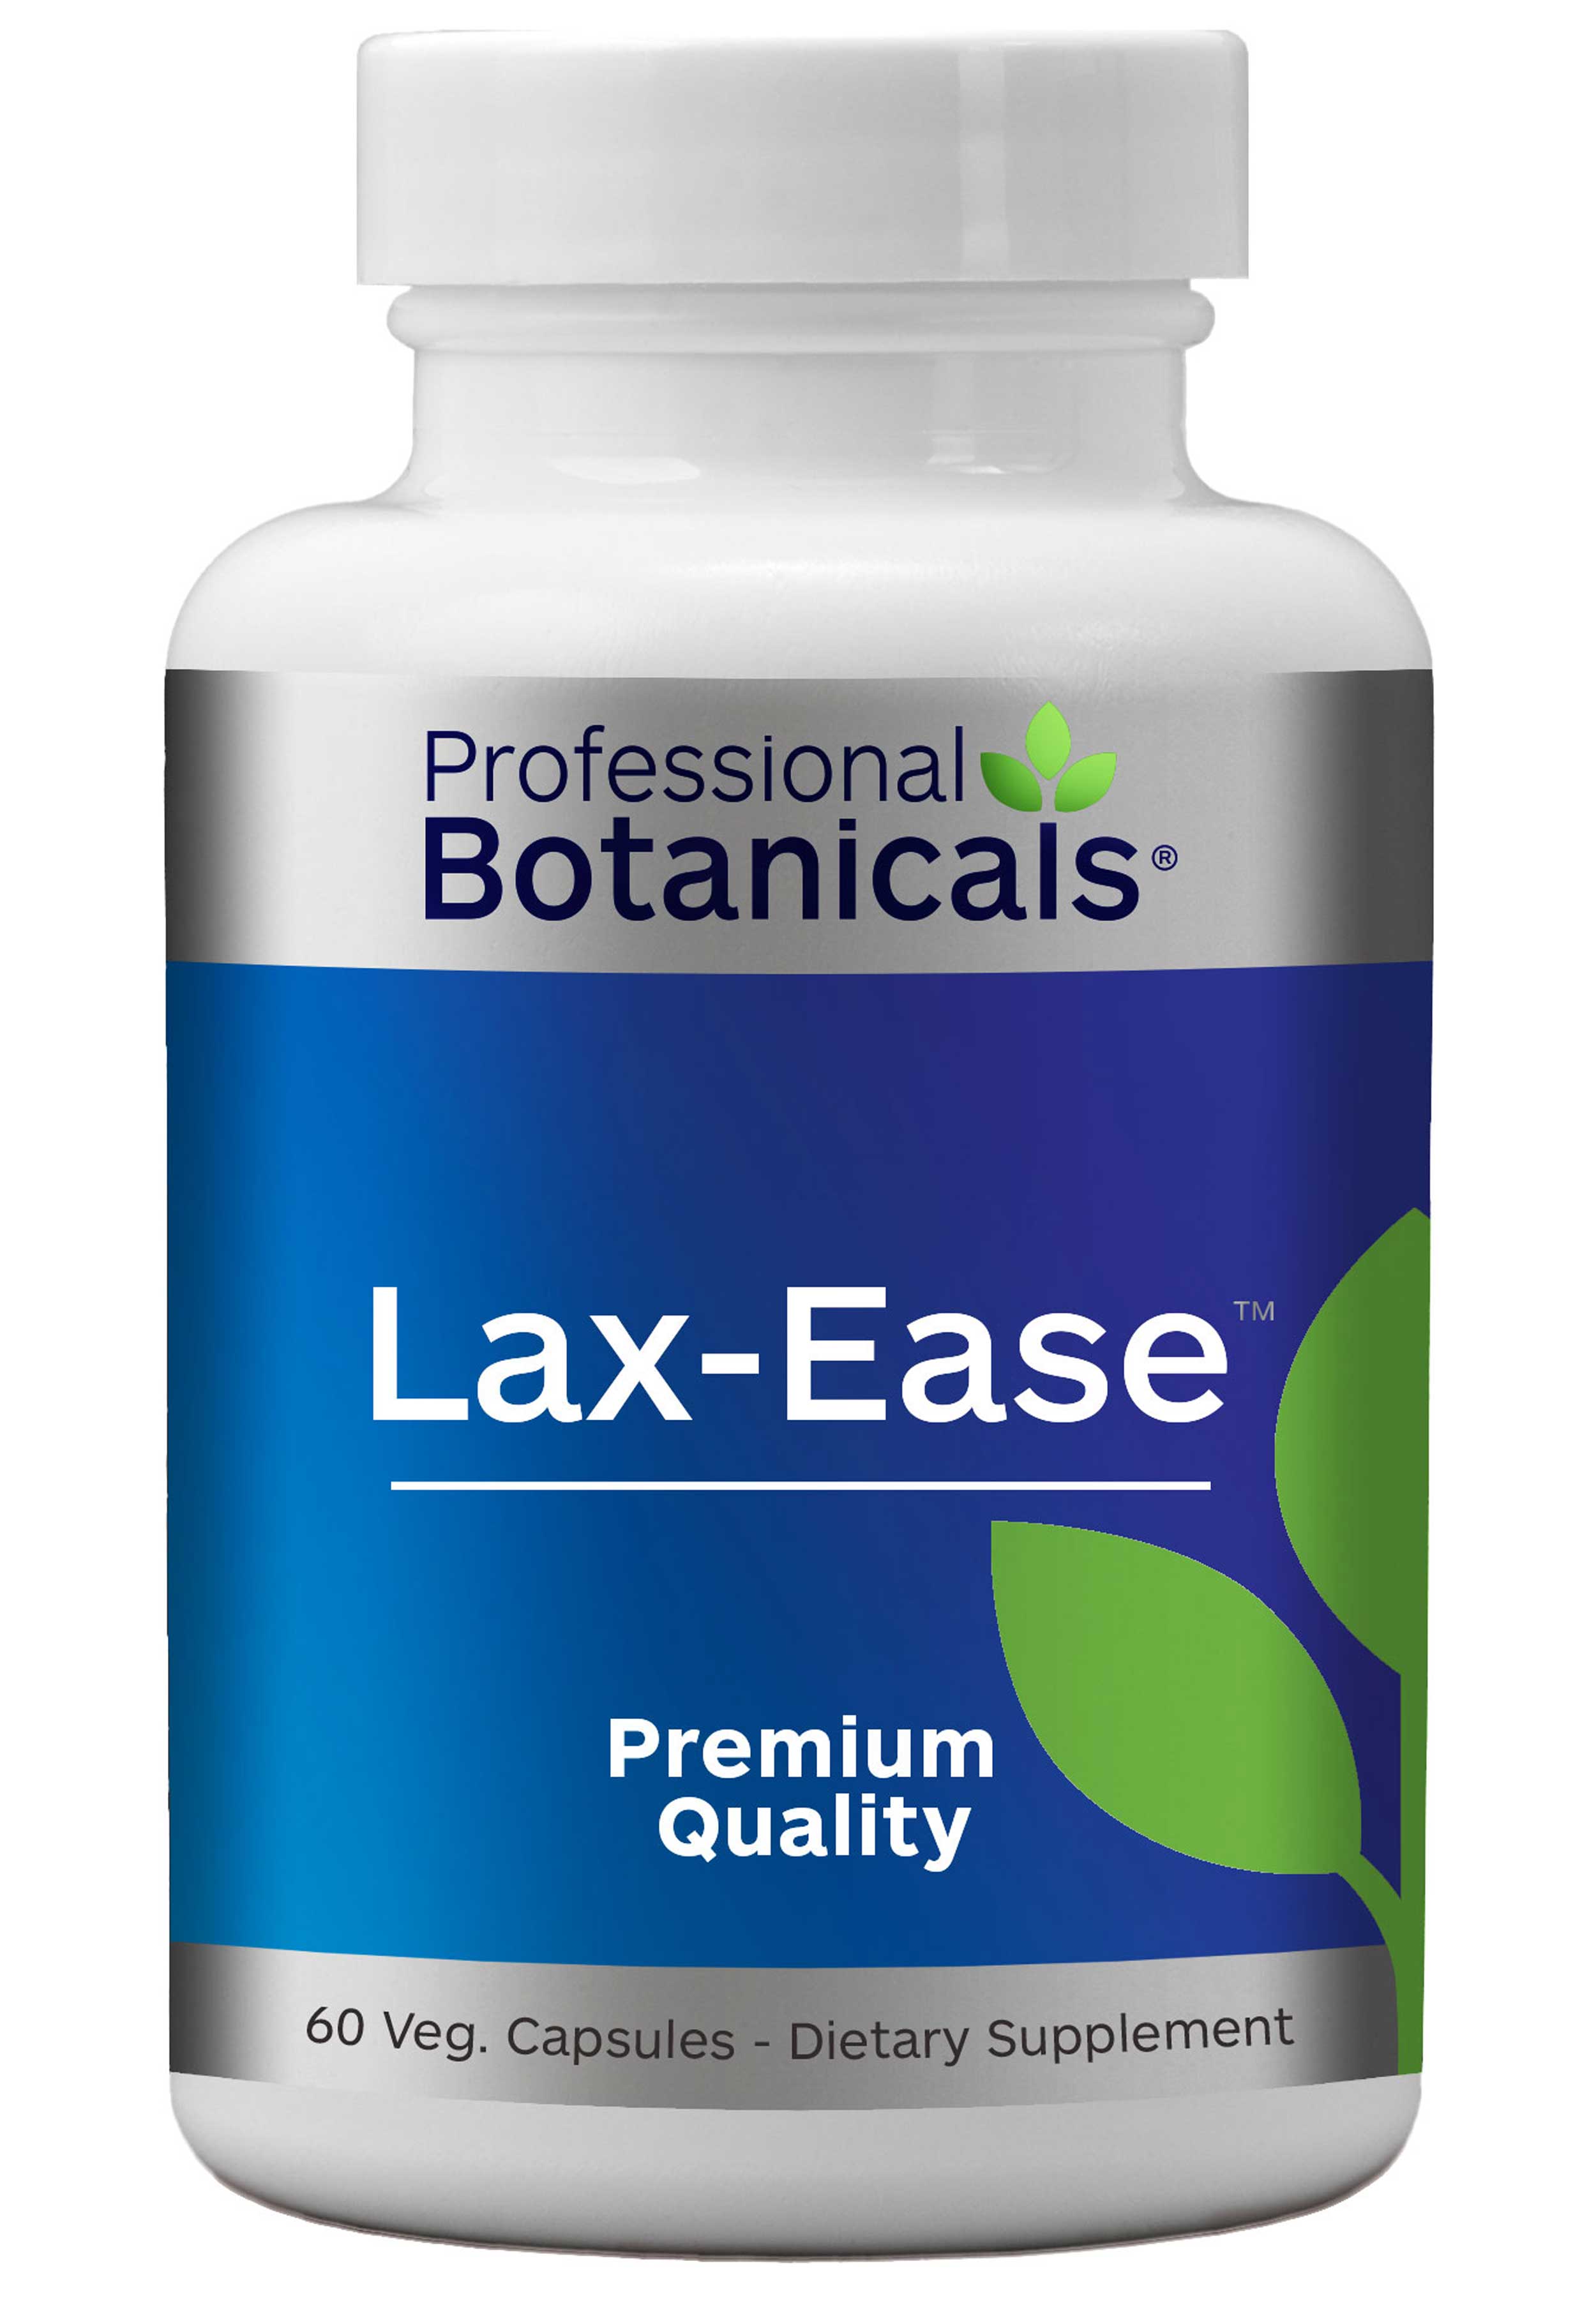 Professional Botanicals Lax-Ease